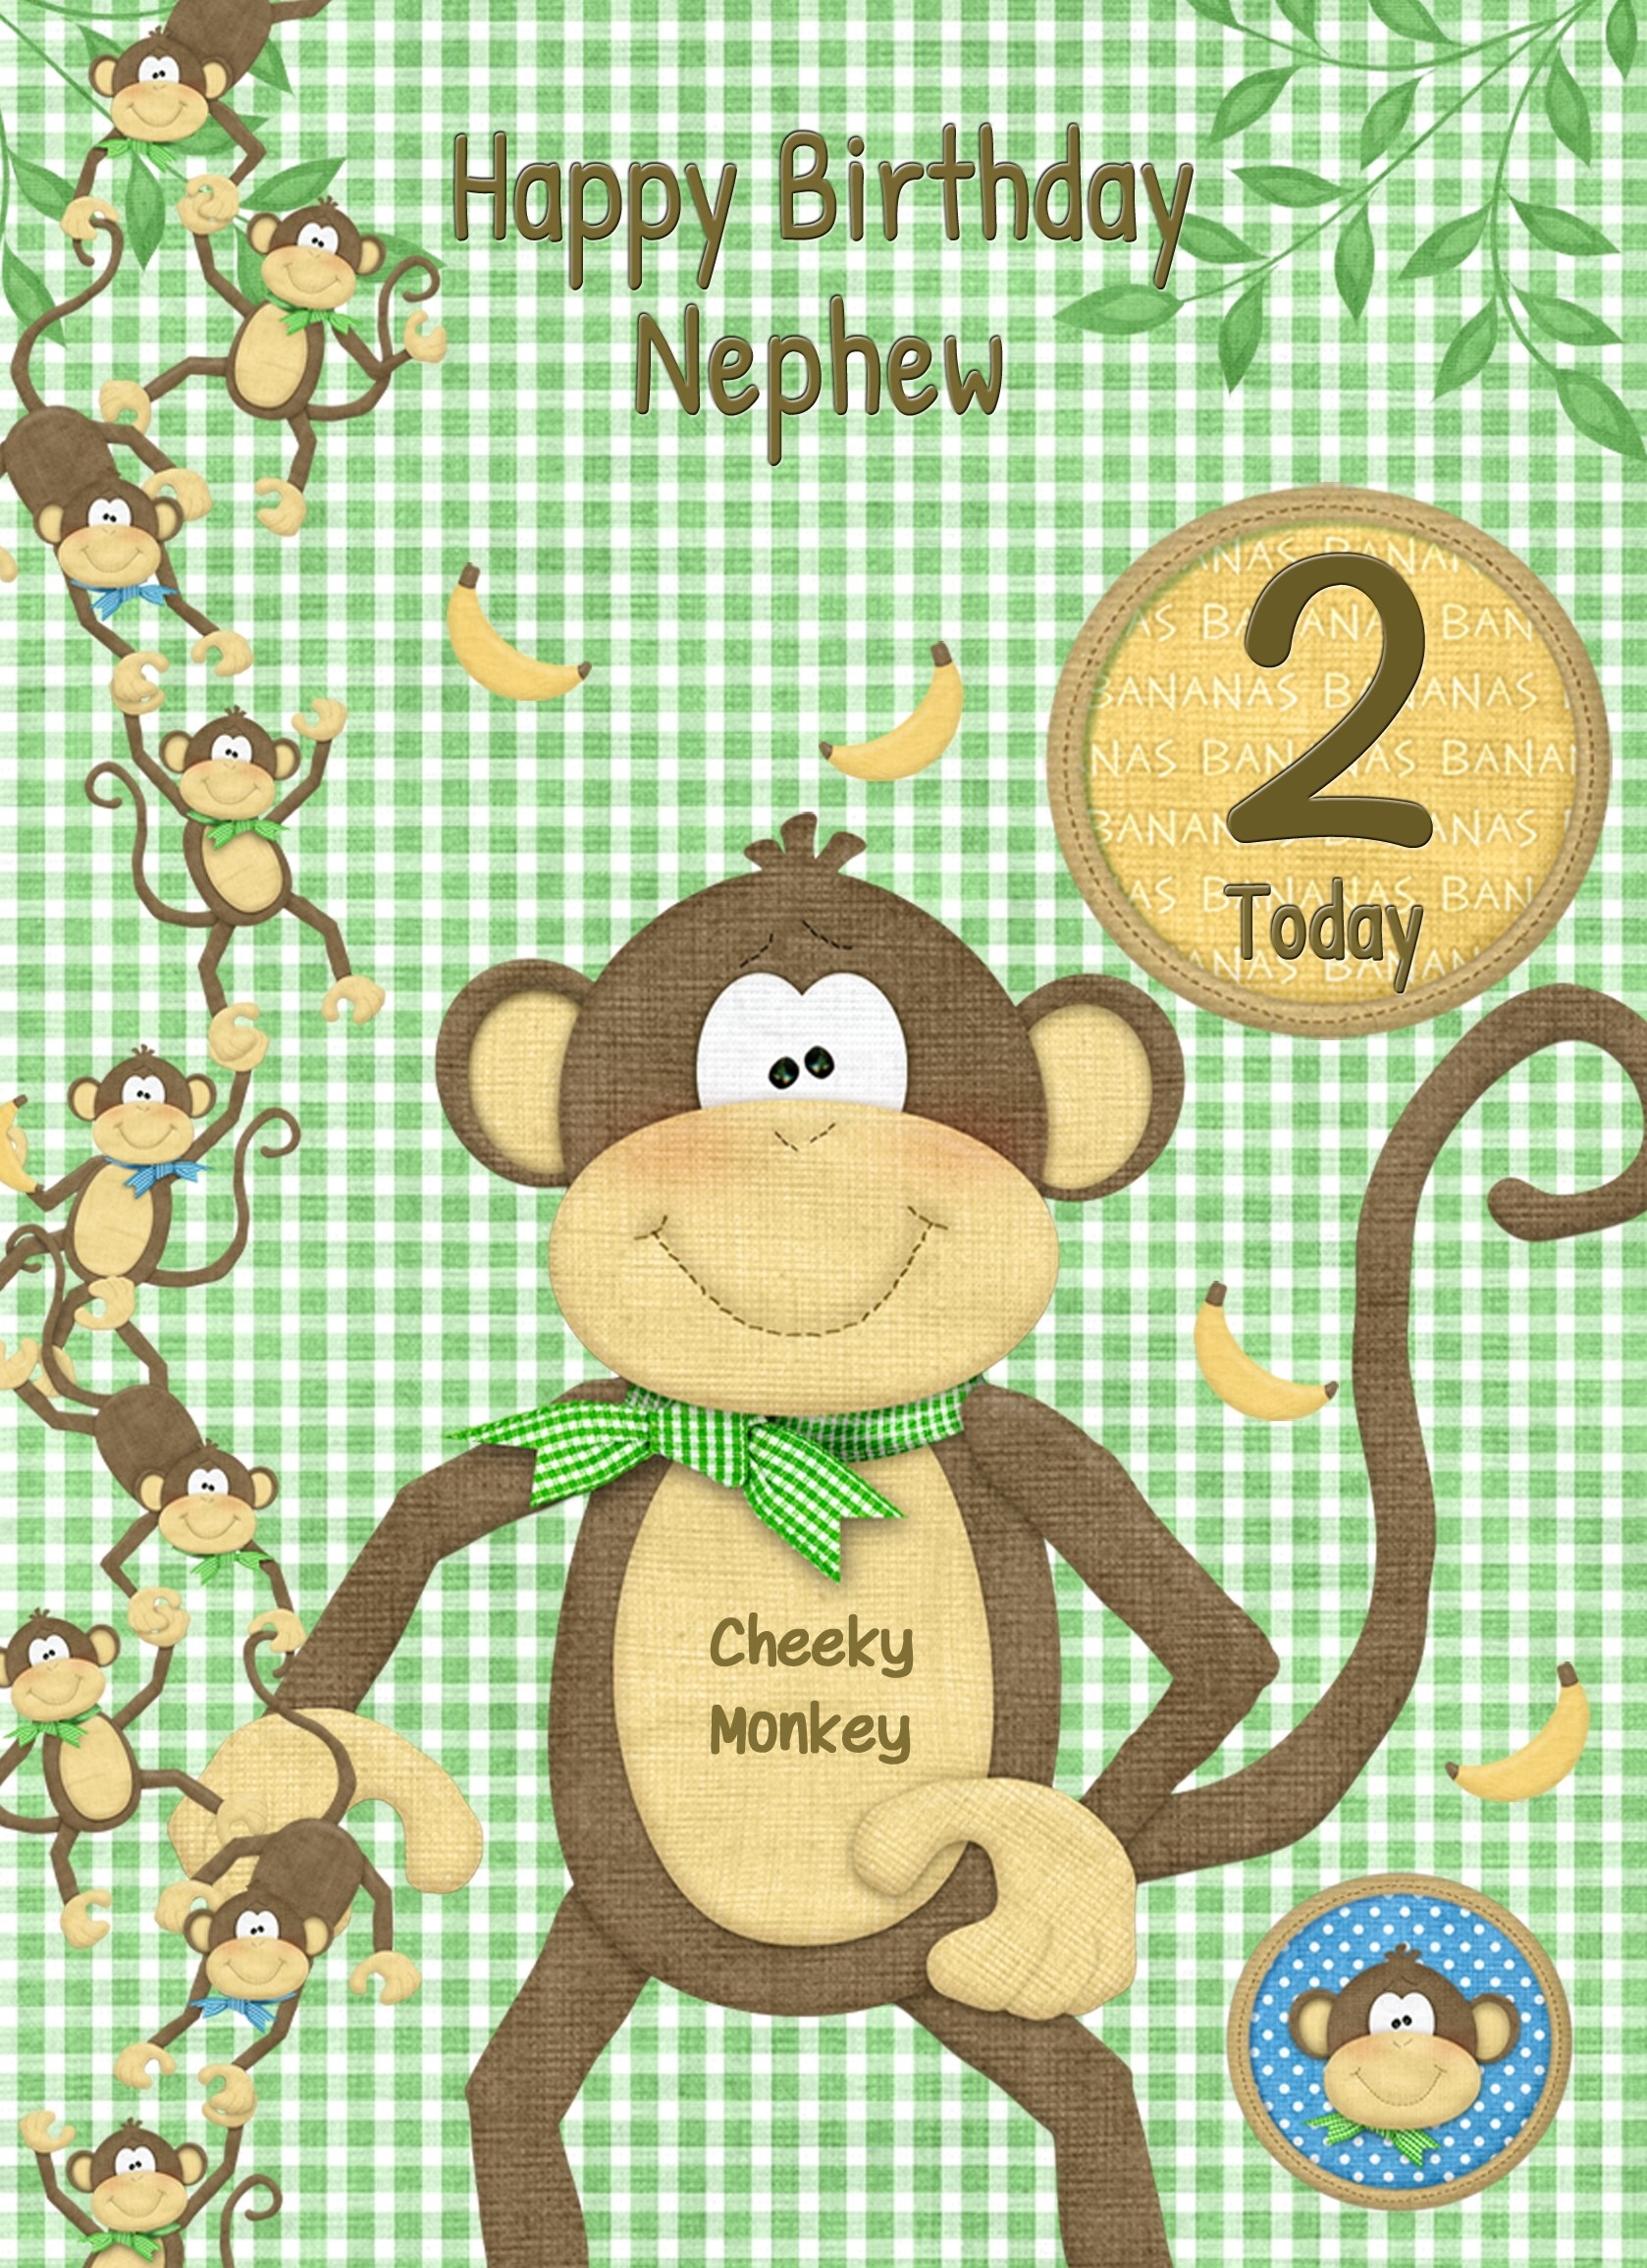 Kids 2nd Birthday Cheeky Monkey Cartoon Card for Nephew